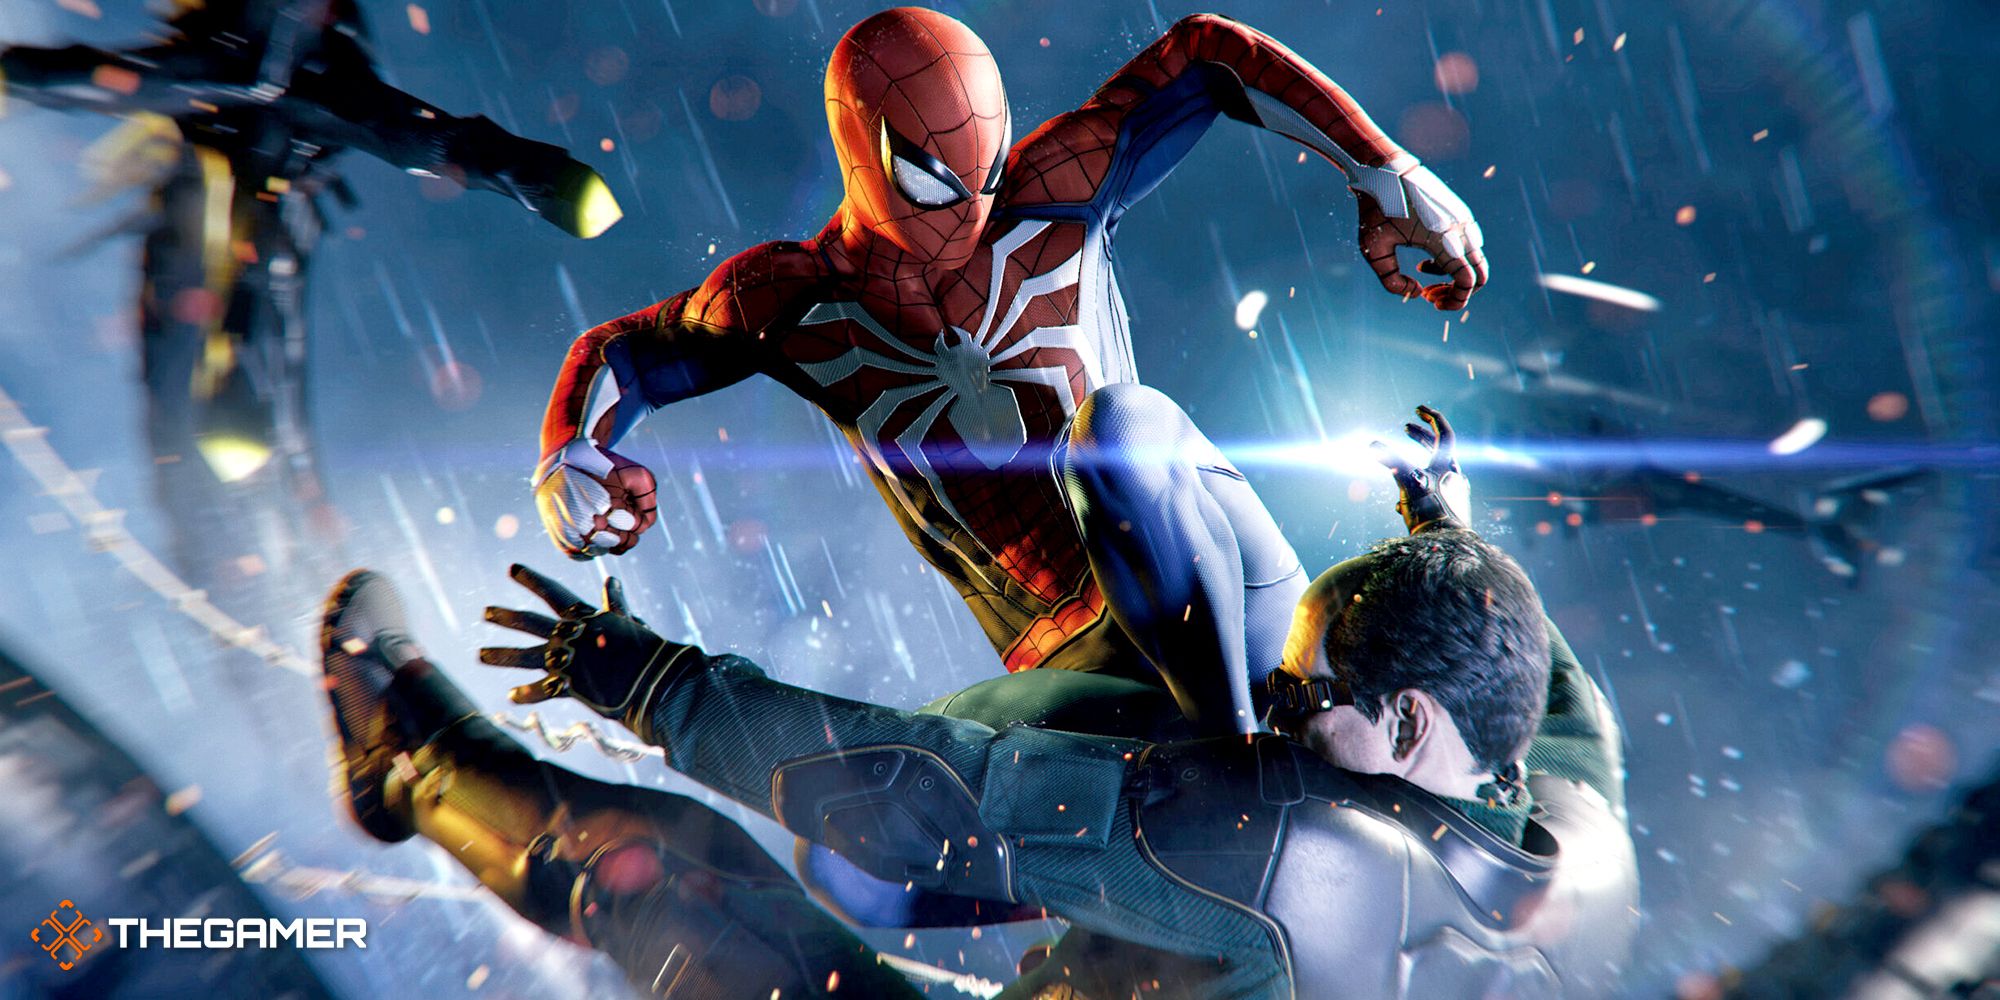 Spider-Man kicking Doc Ock in Marvel's Spider-Man